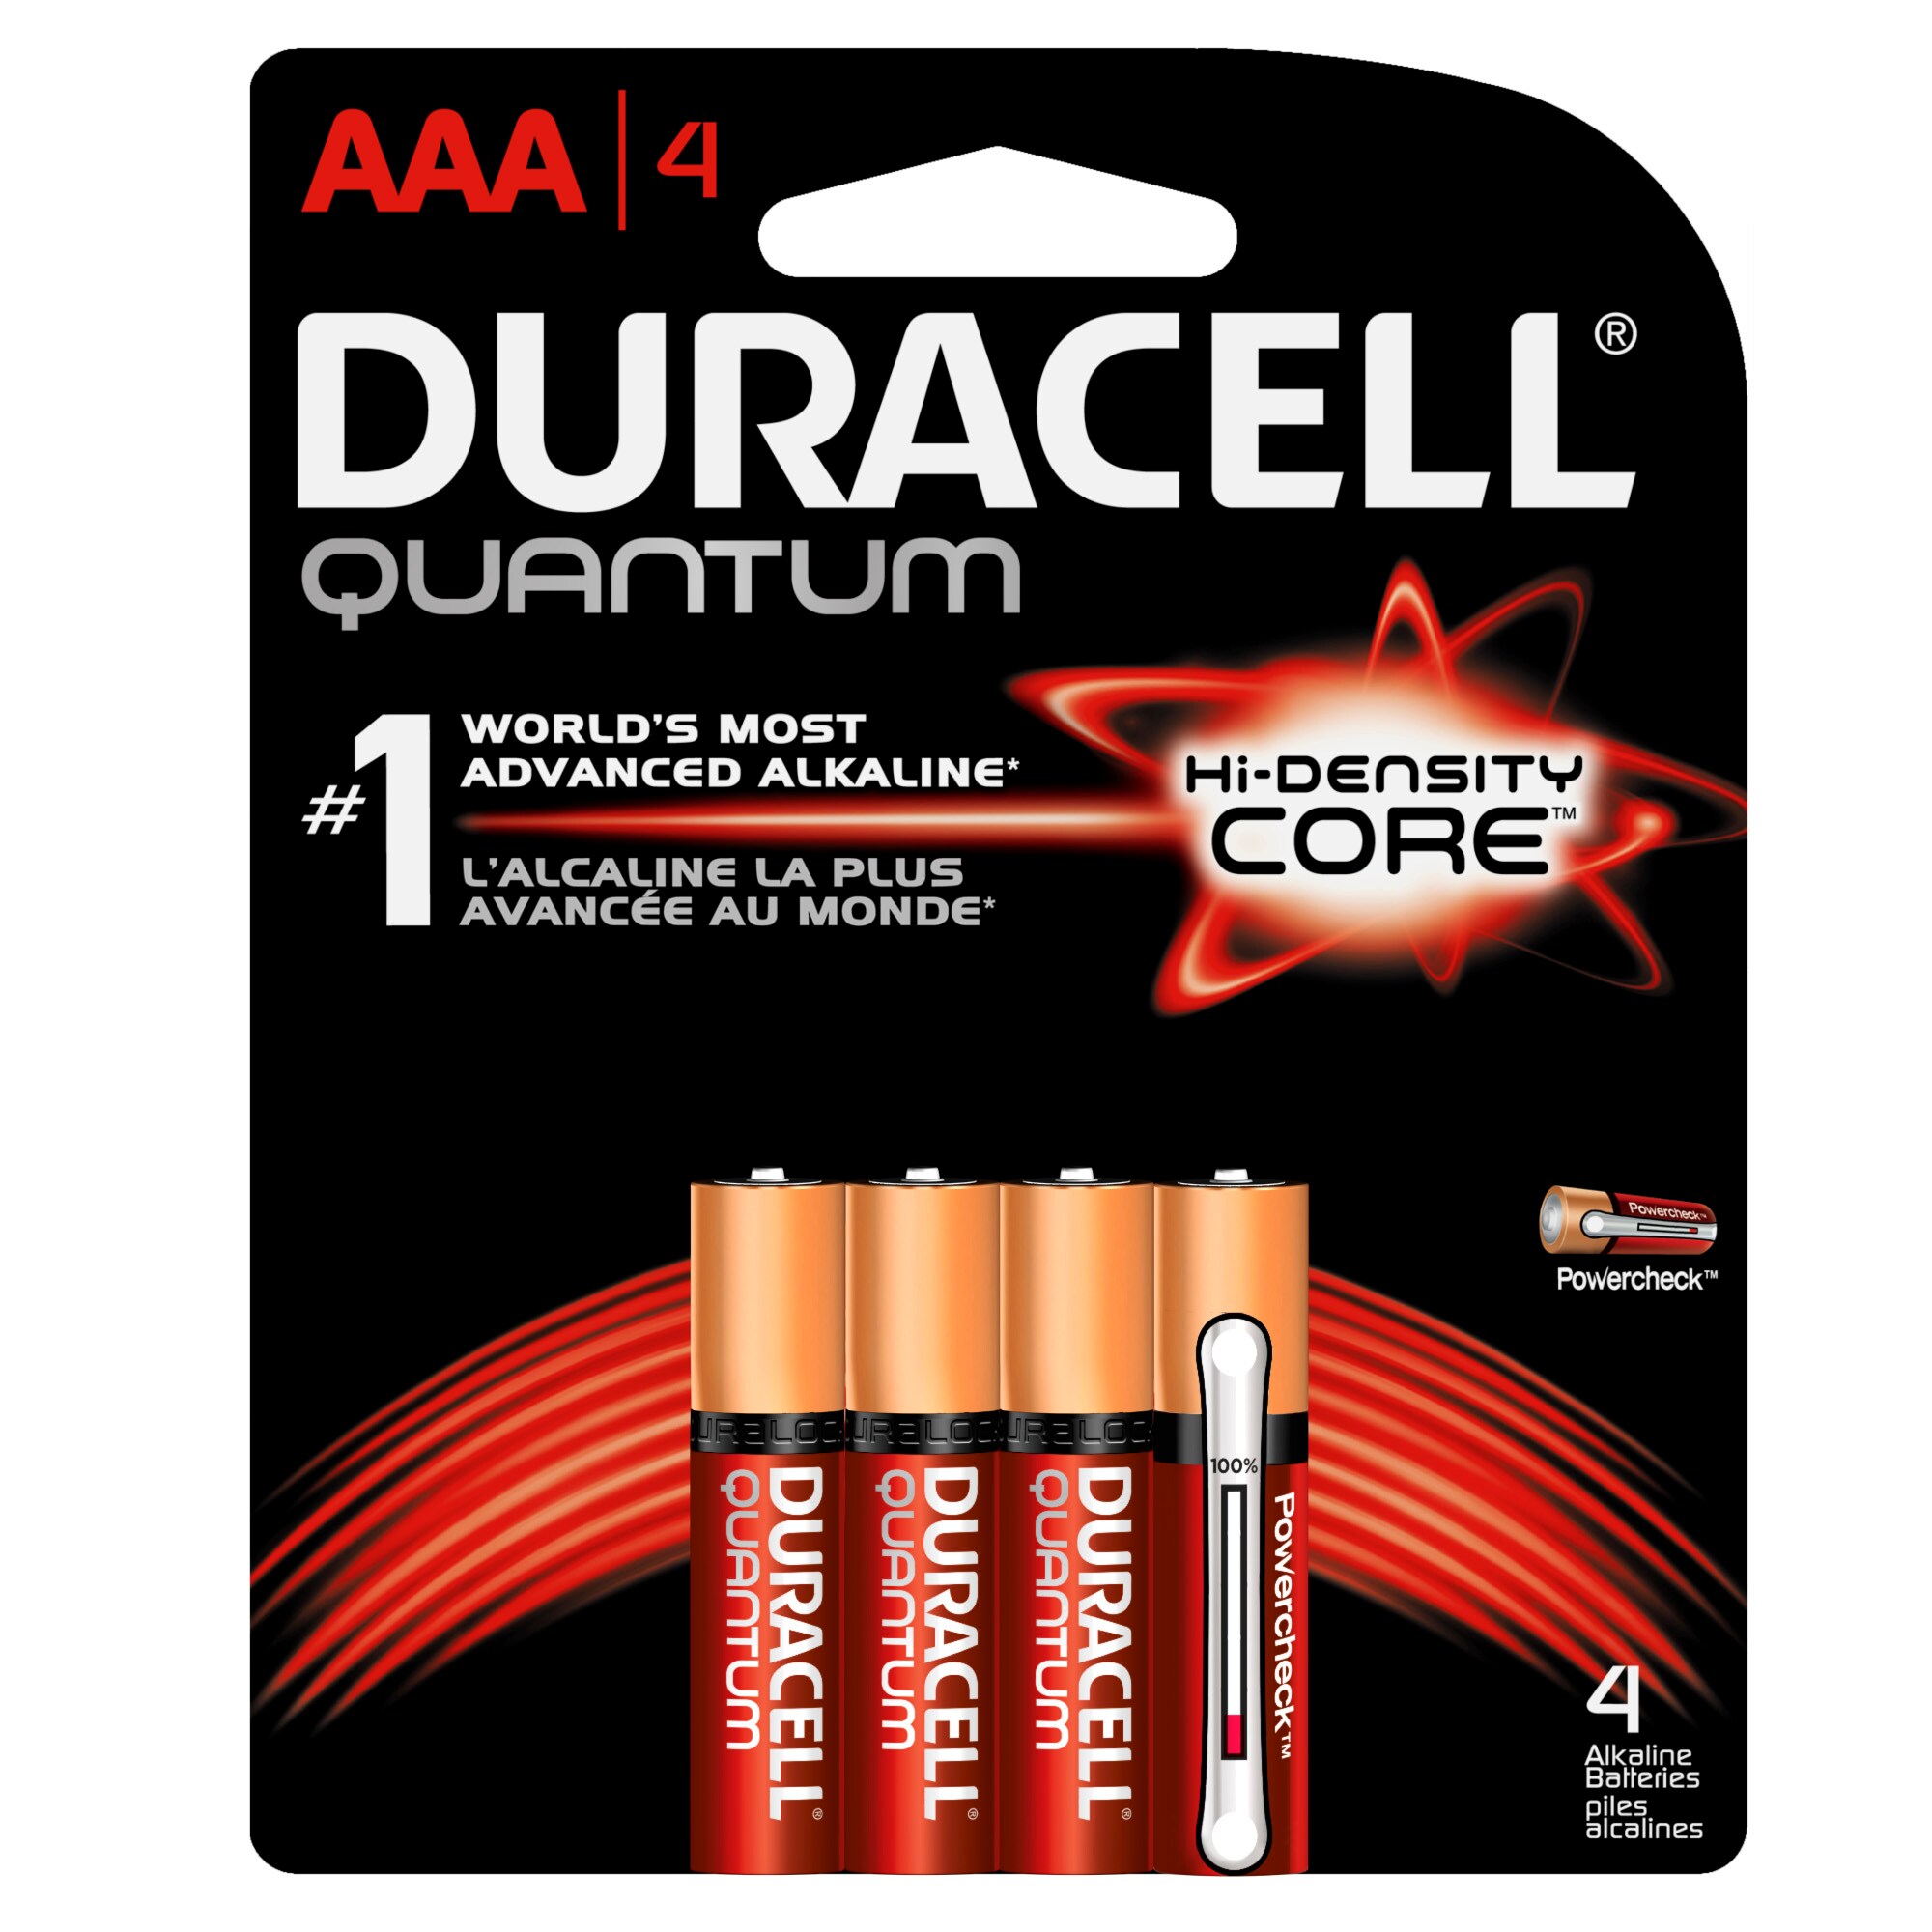 Duracell Quantum Alkaline D Batteries Pack of 12 Batteries 